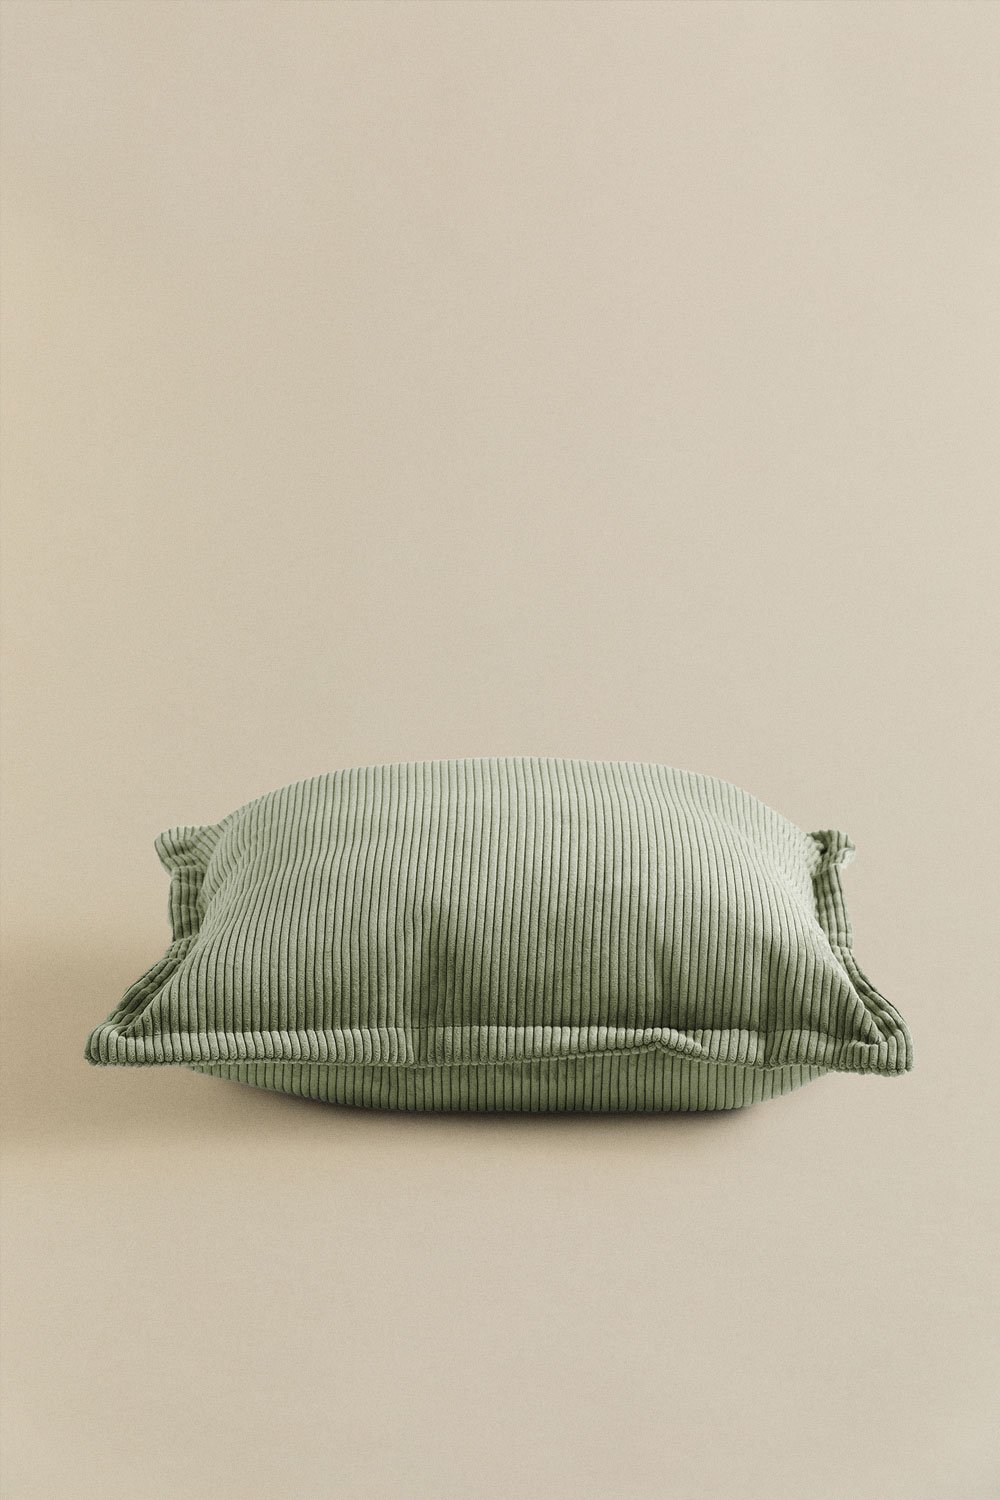 Kata corduroy square cushion (53x53 cm) , gallery image 2